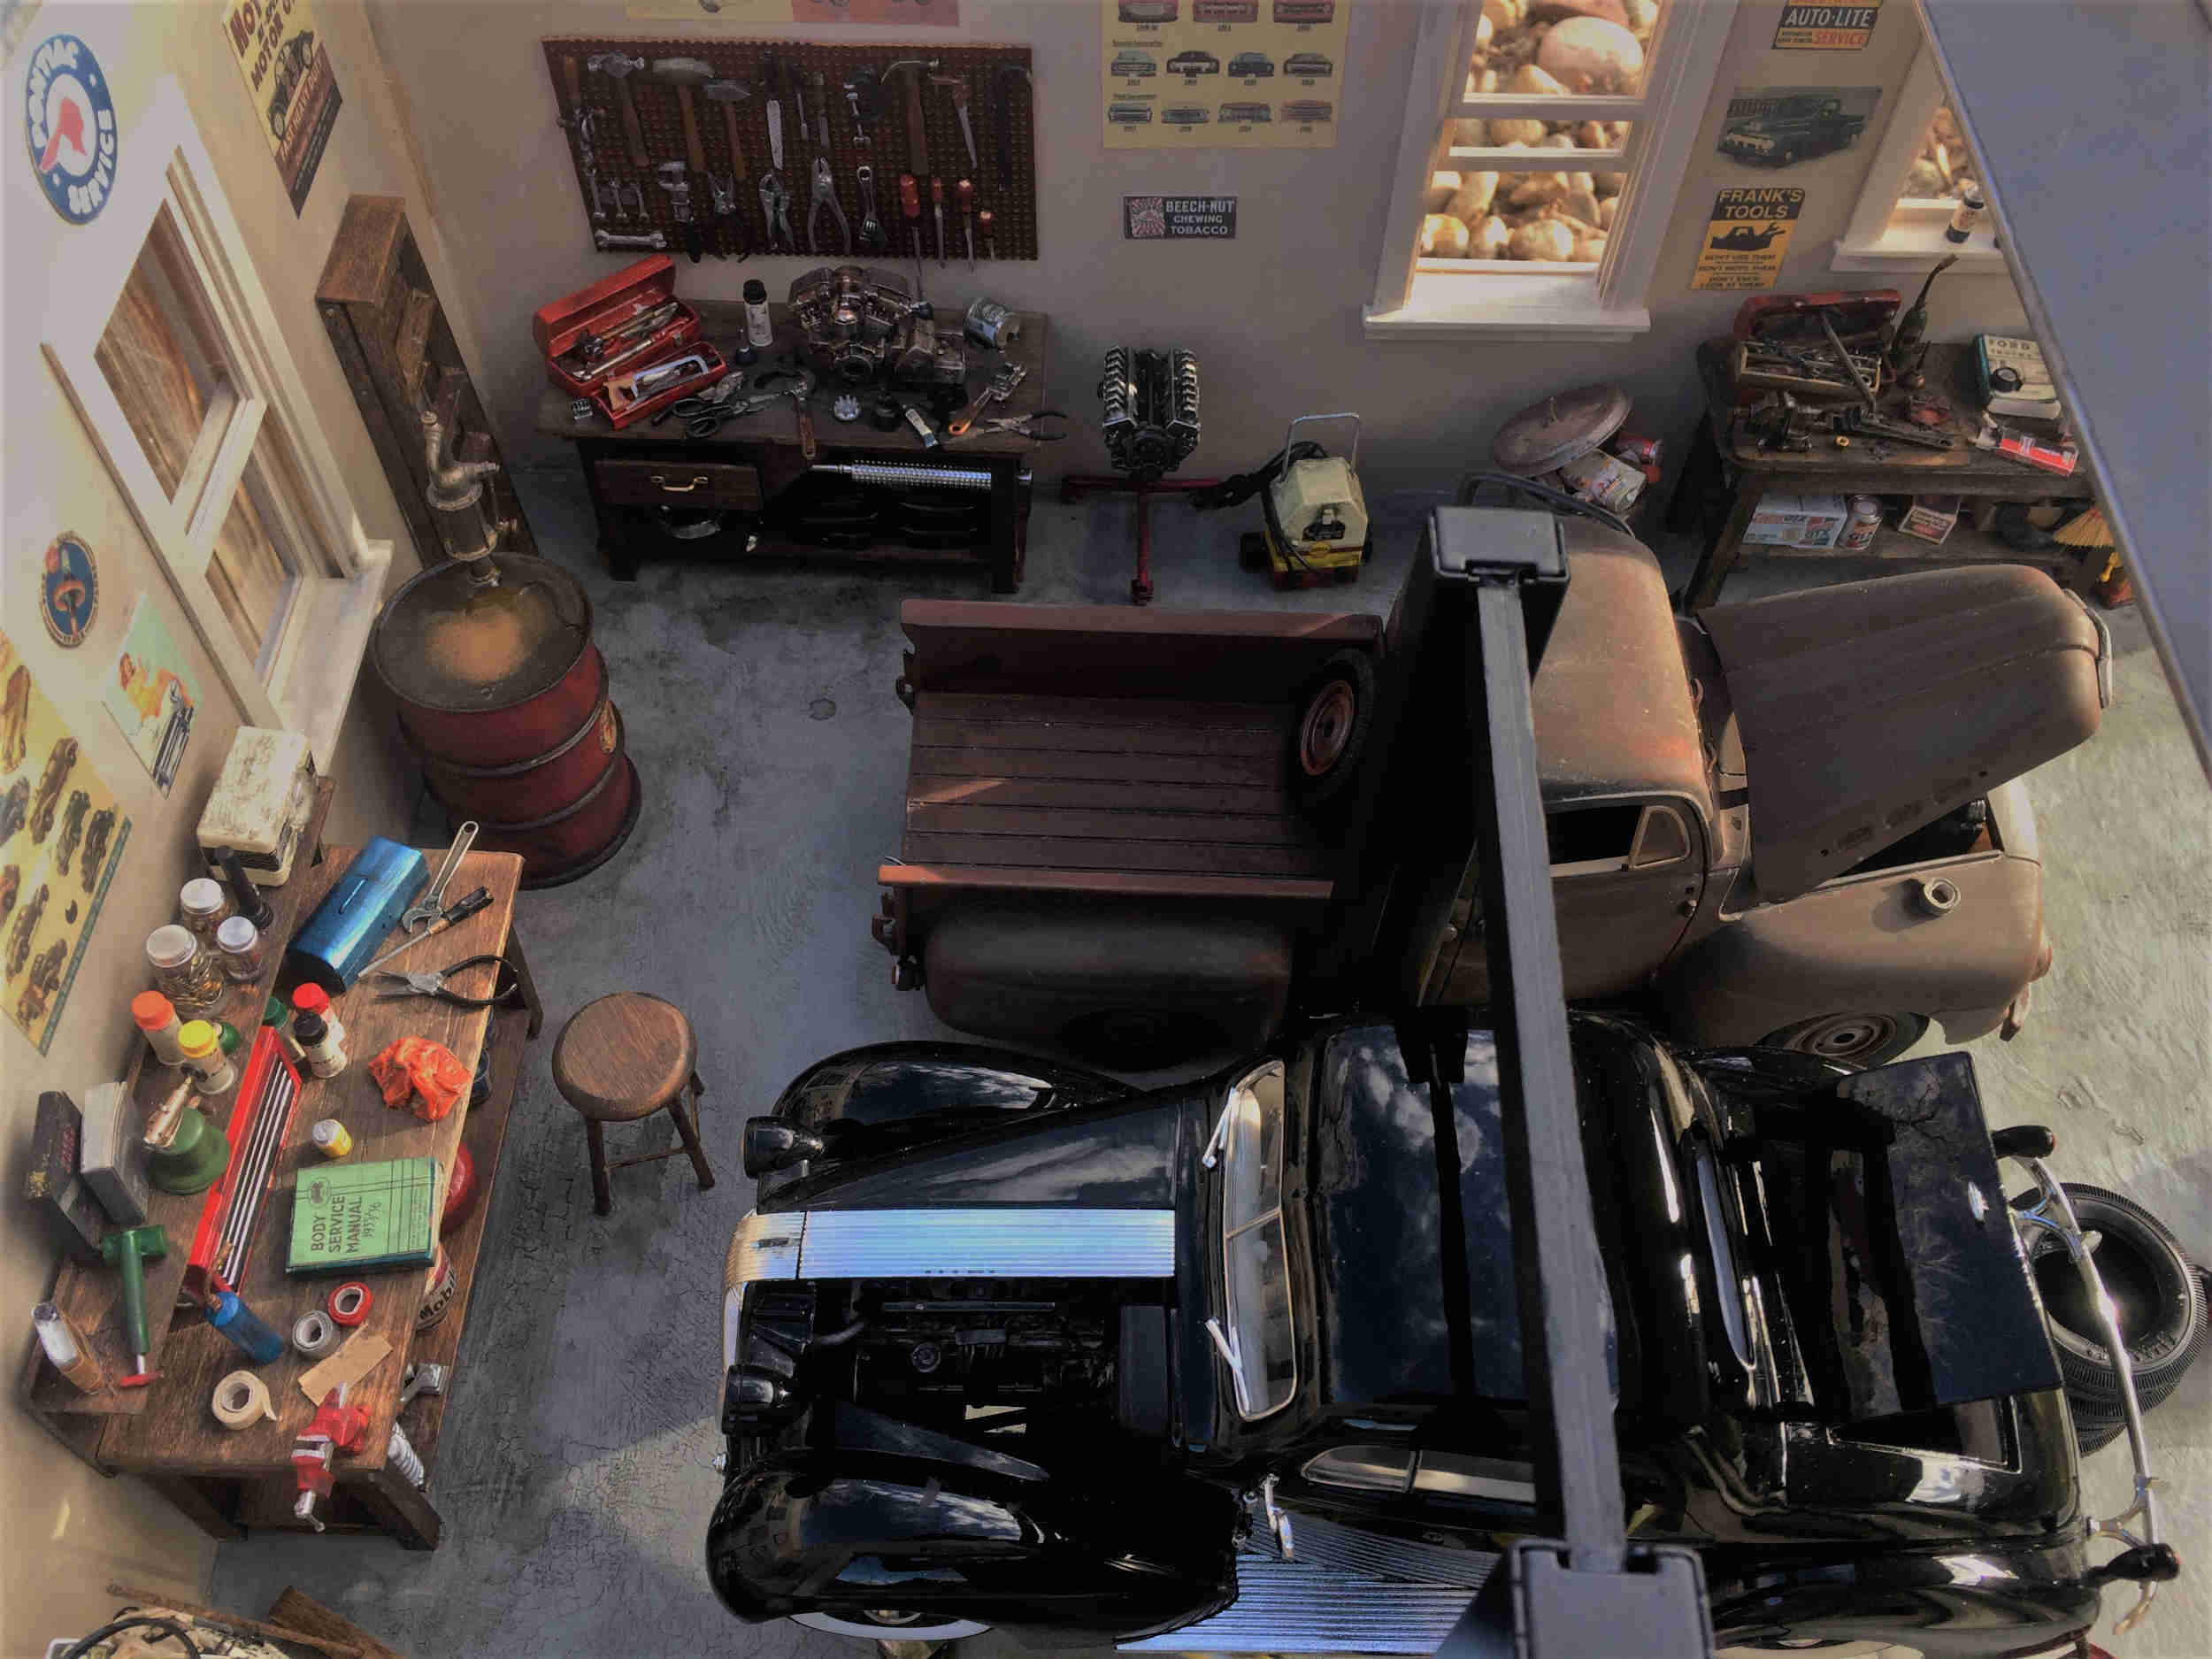 Overview of garage interior